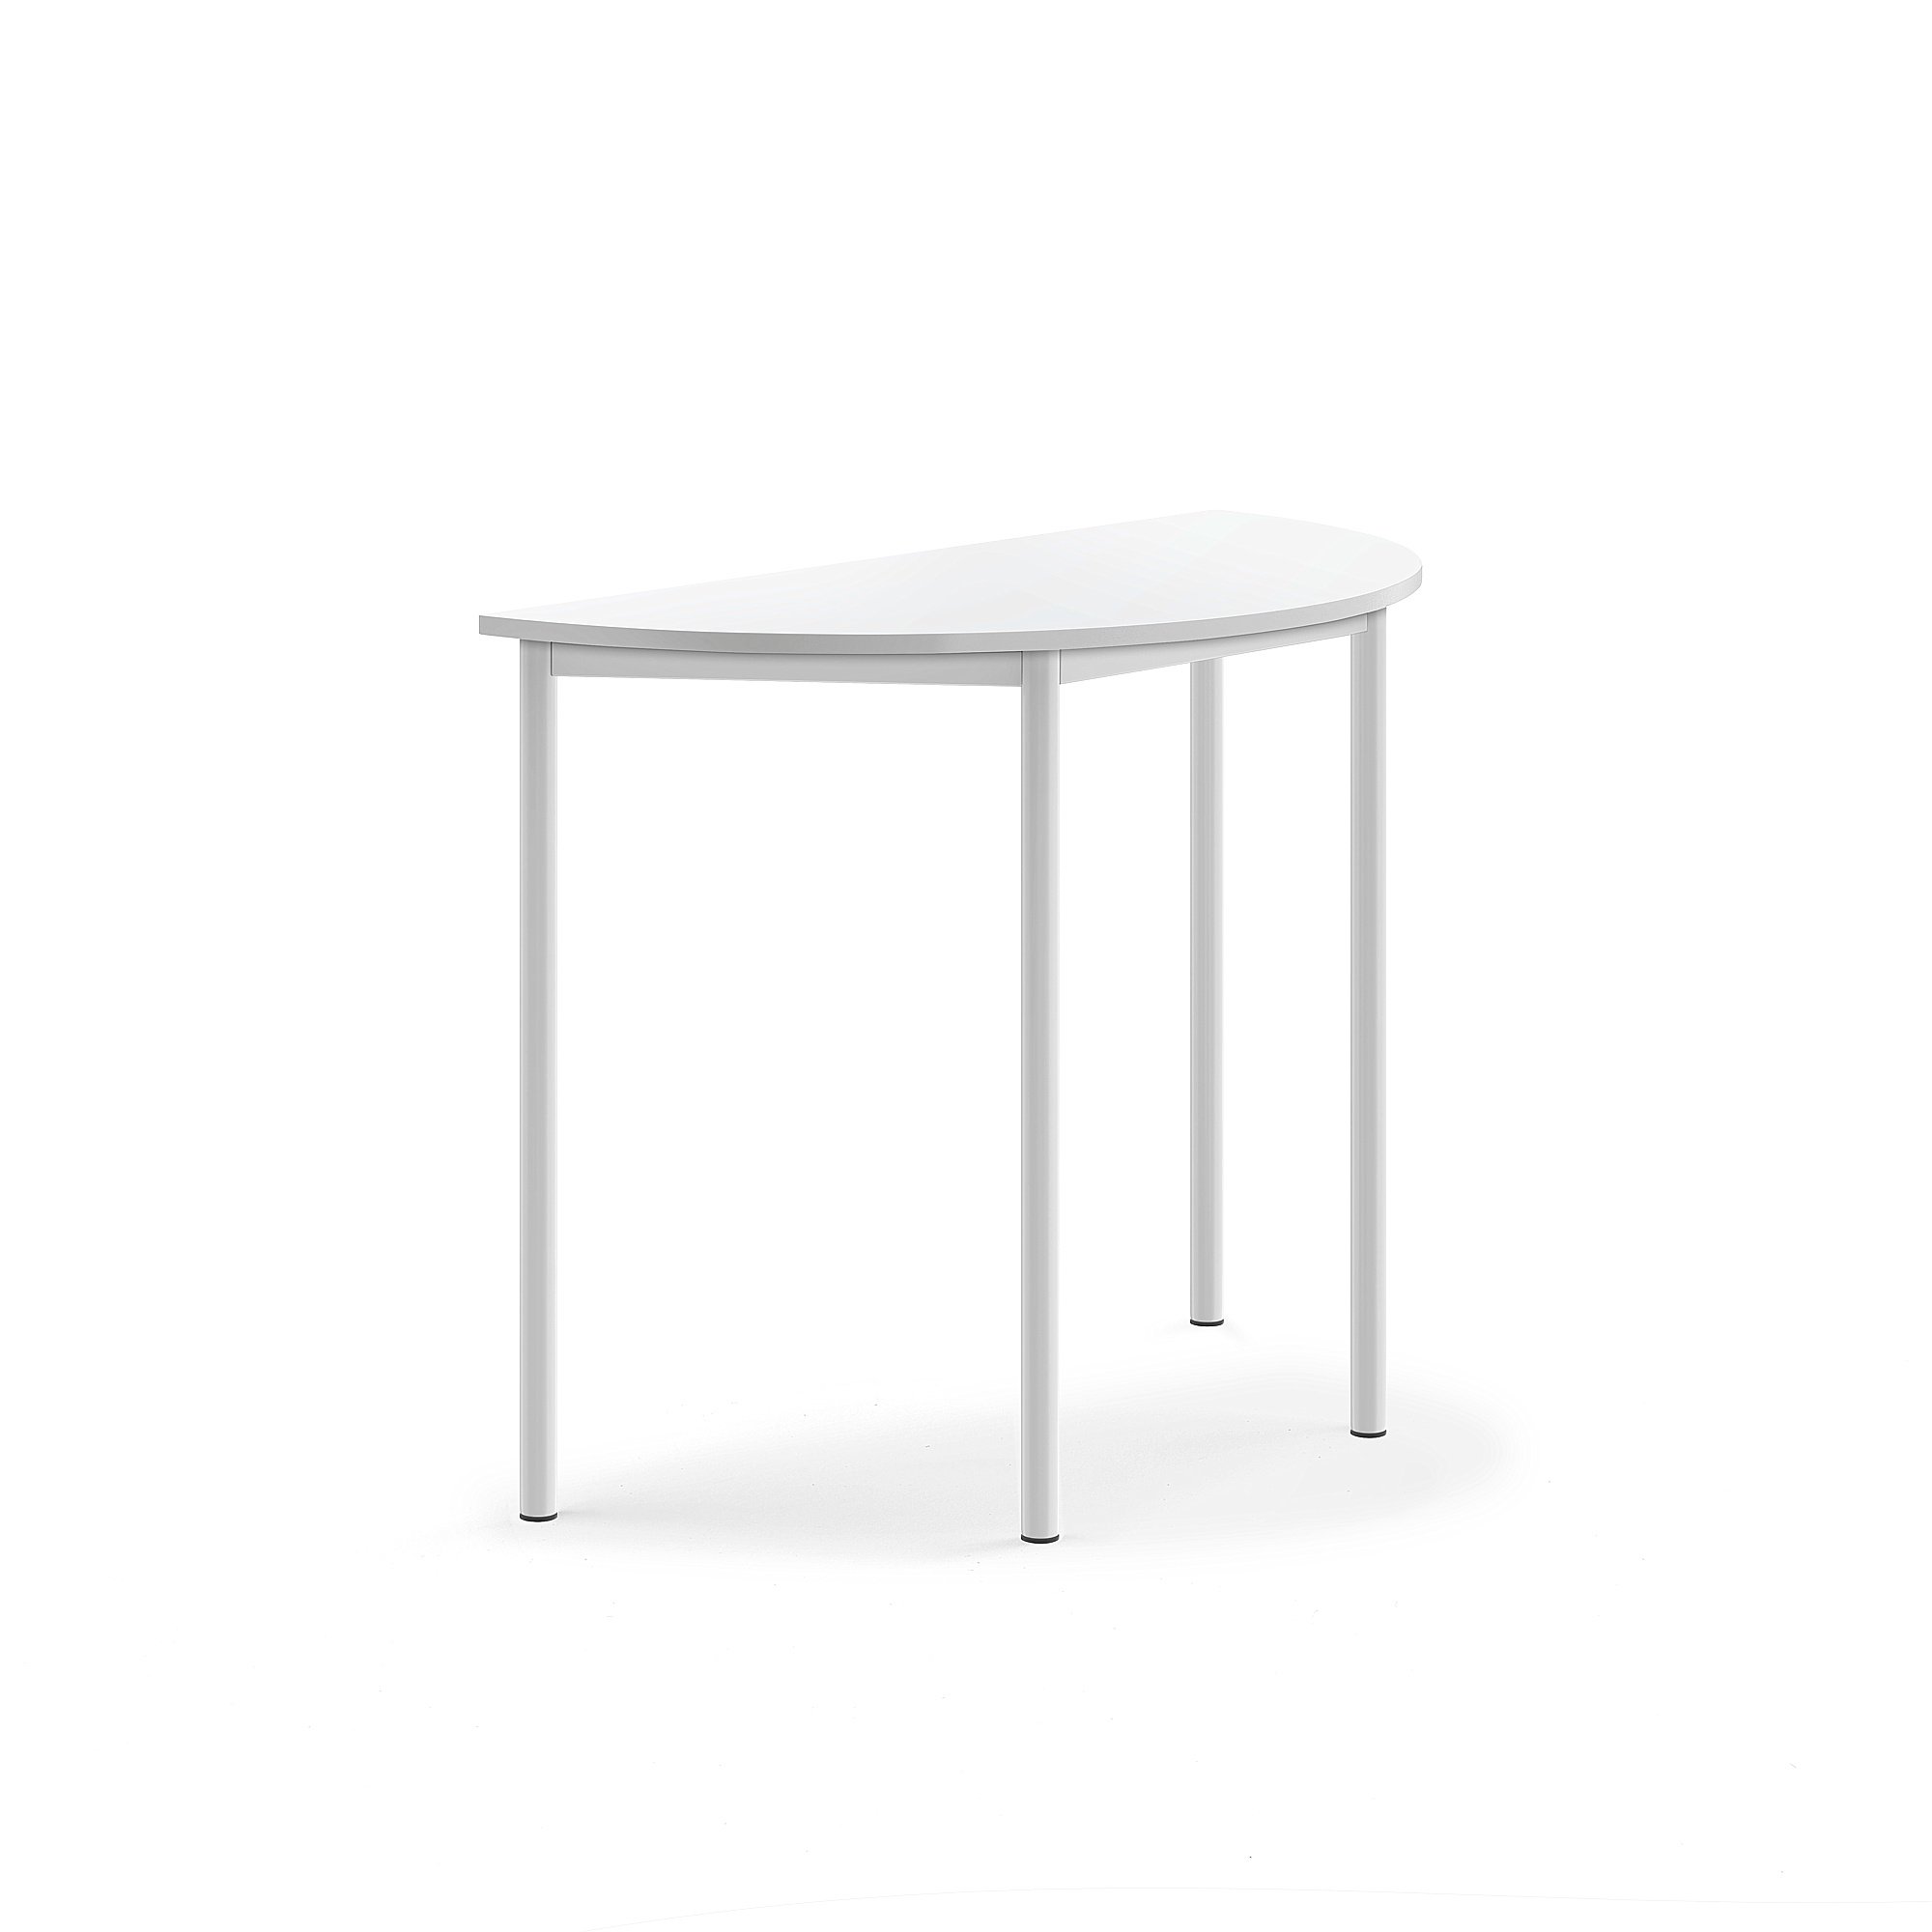 Stůl BORÅS, půlkruh, 1200x600x900 mm, bílé nohy, HPL deska, bílá